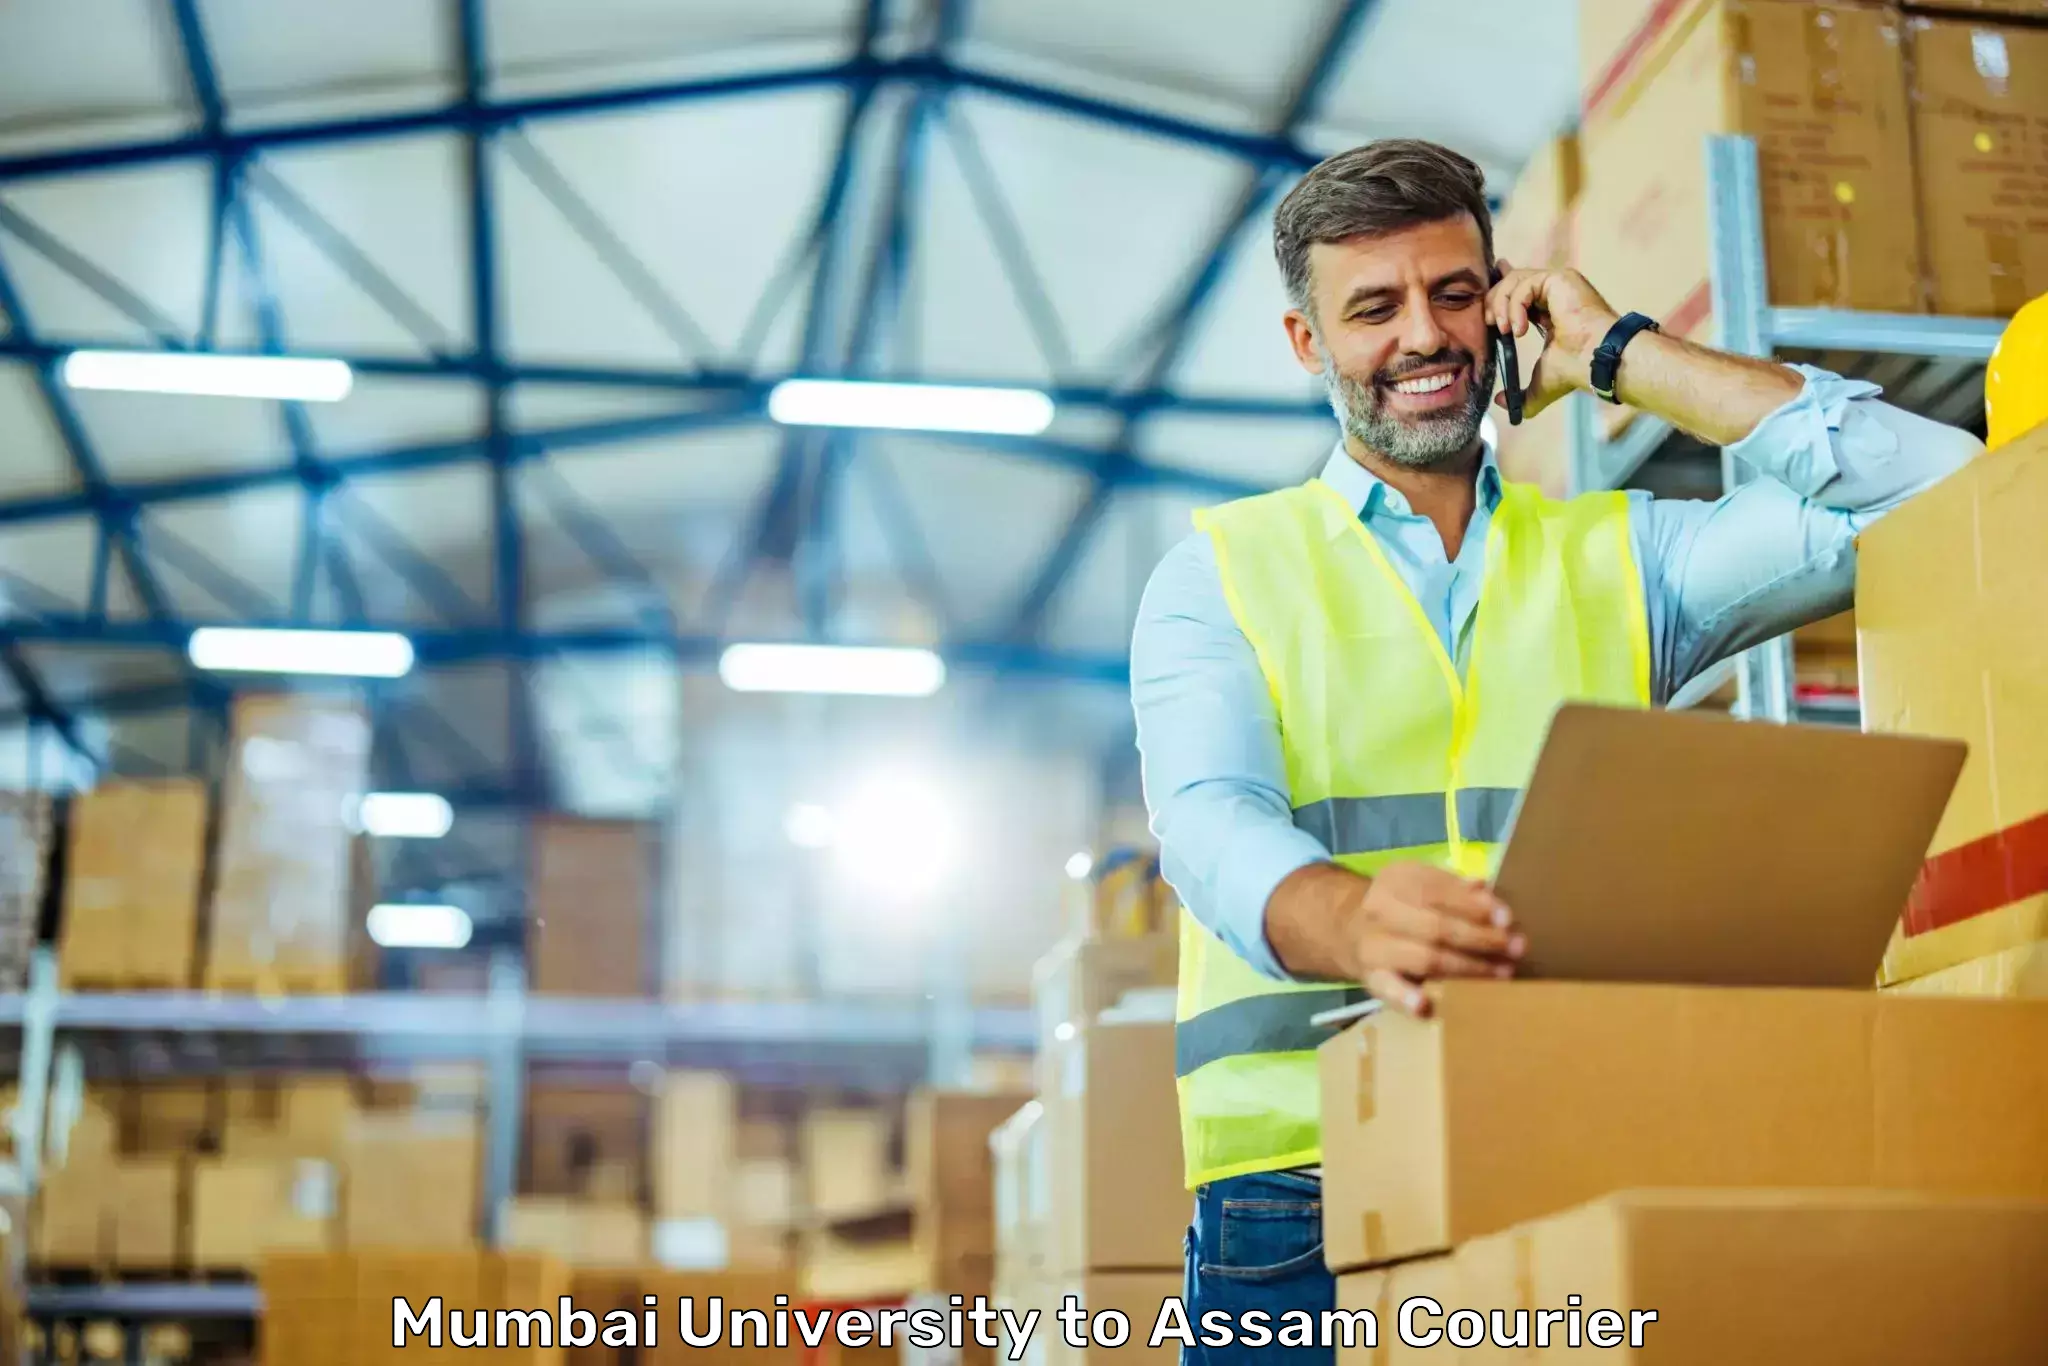 Courier dispatch services Mumbai University to Guwahati University